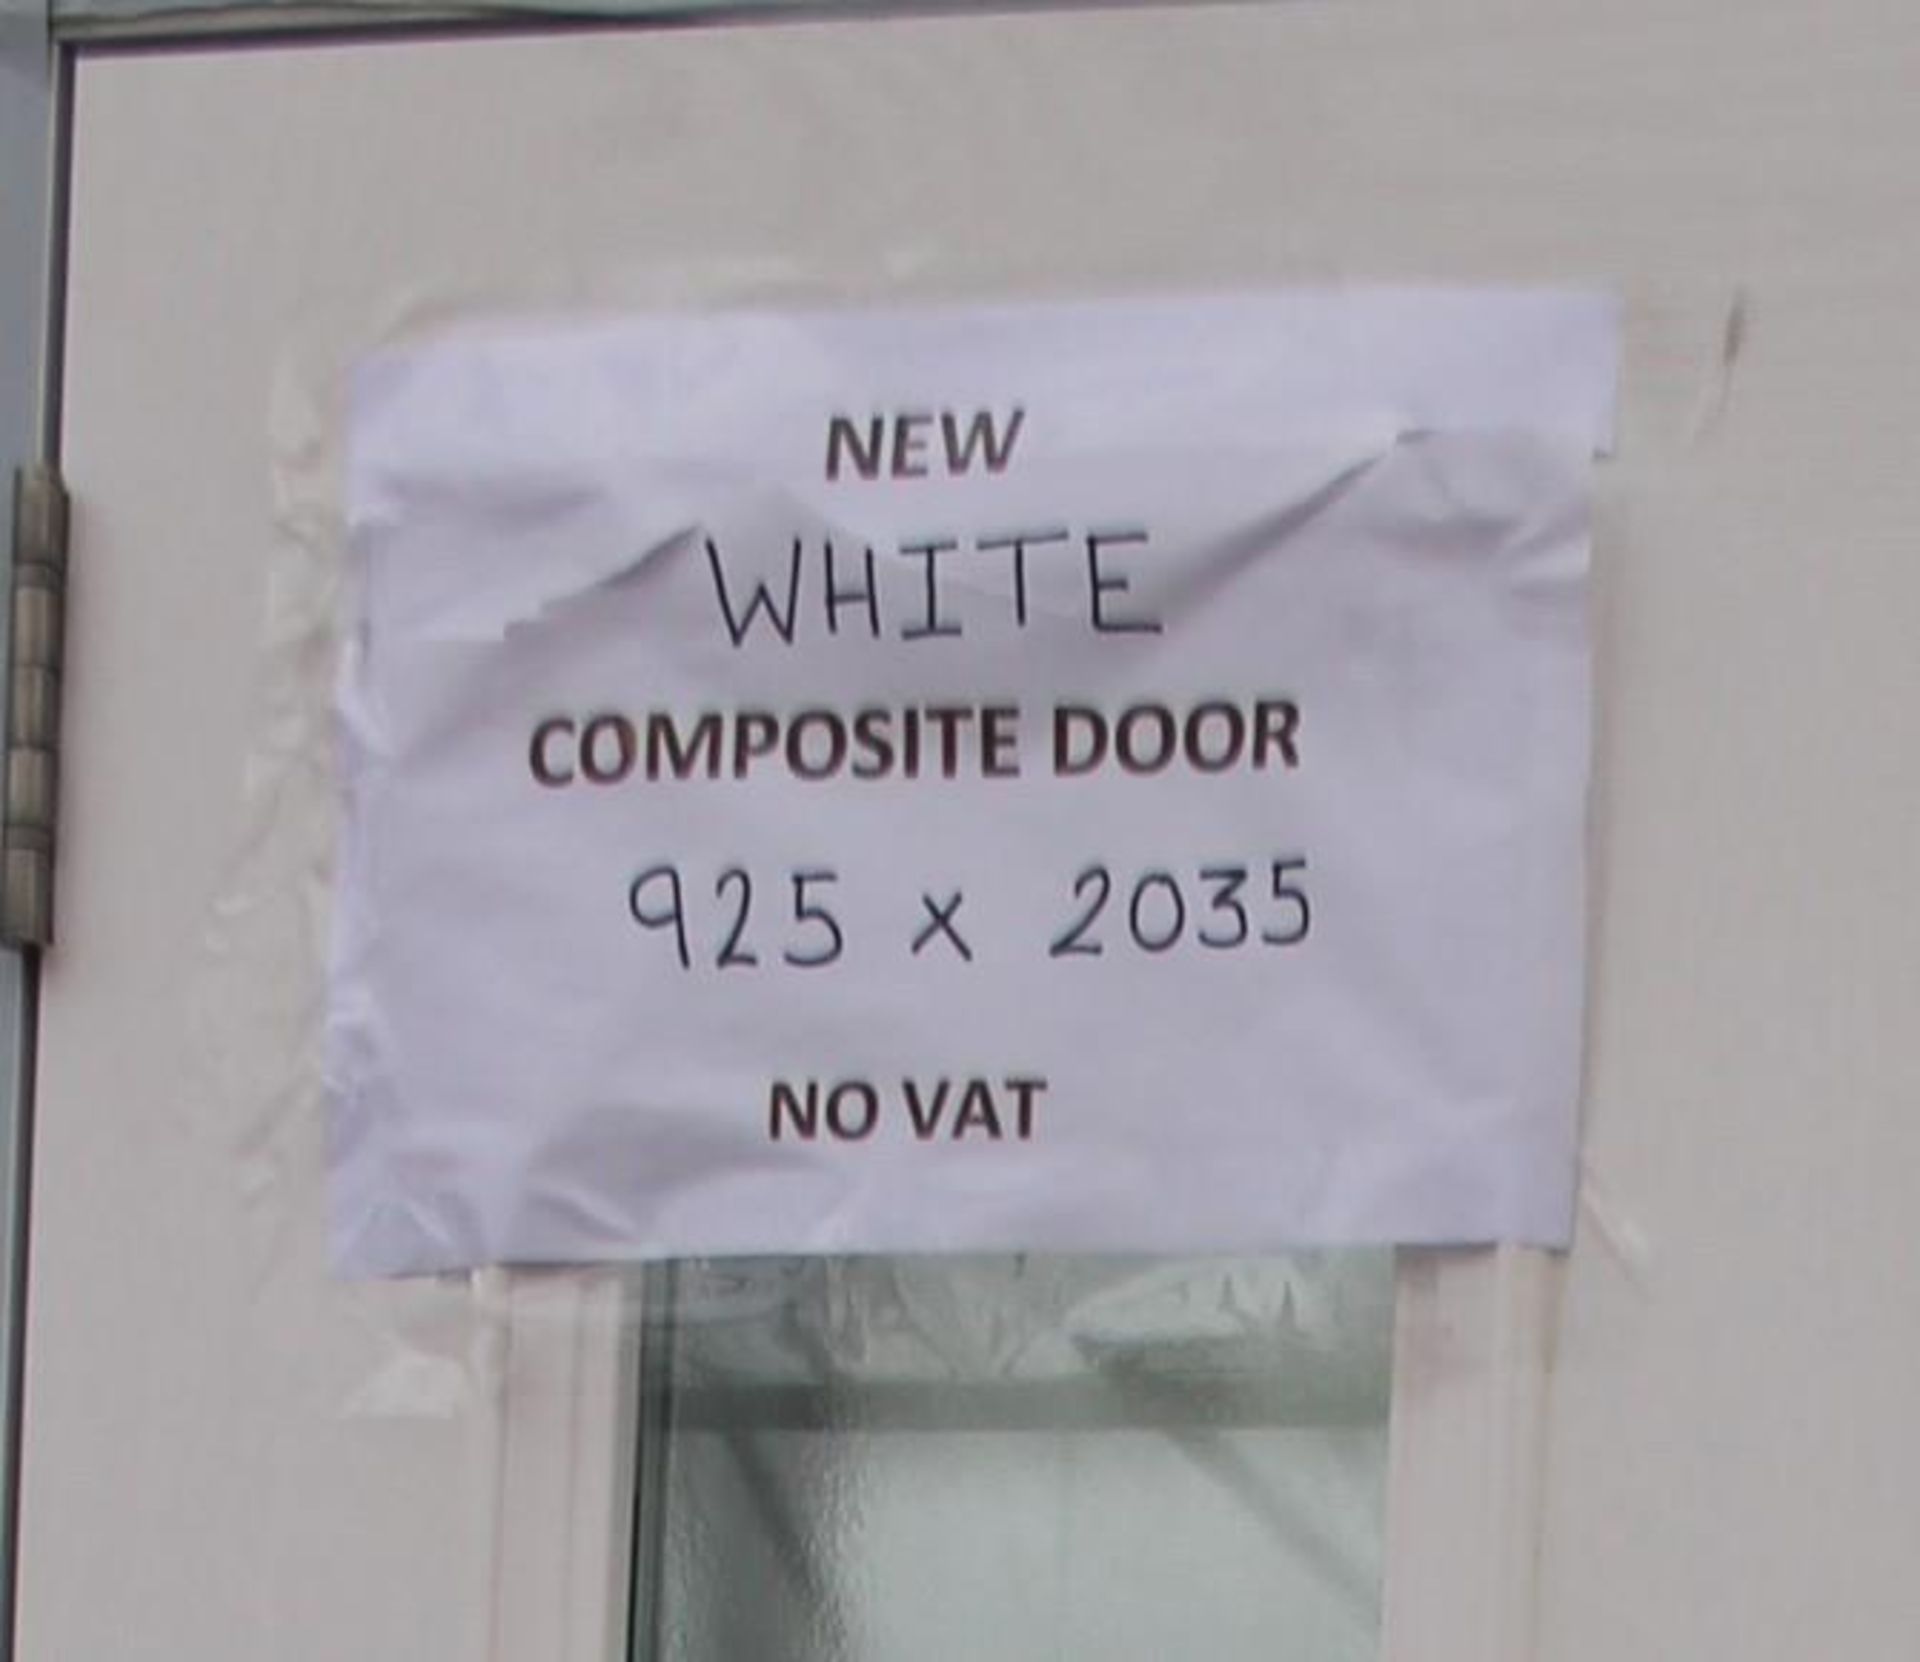 A NEW WHITE COMPOSITE DOOR AND FRAME 925MM X 2035 MM 3 KEYS NO VAT - Image 2 of 2